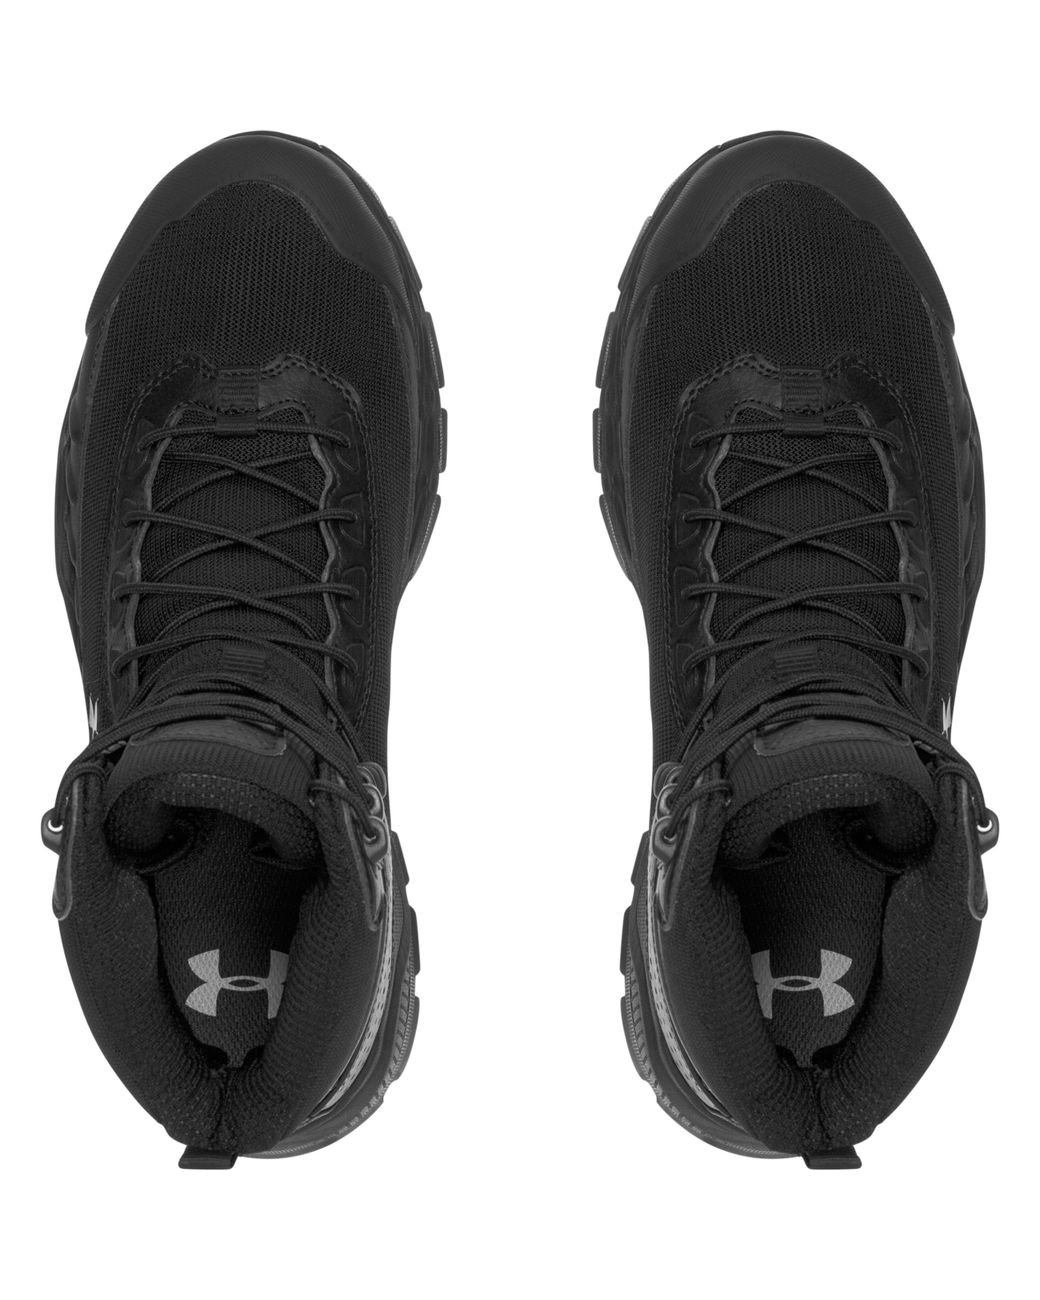 Under Armour Synthetic Men's Ua Valsetz 2.0 Tactical Boots in Black /Black  (Black) for Men | Lyst